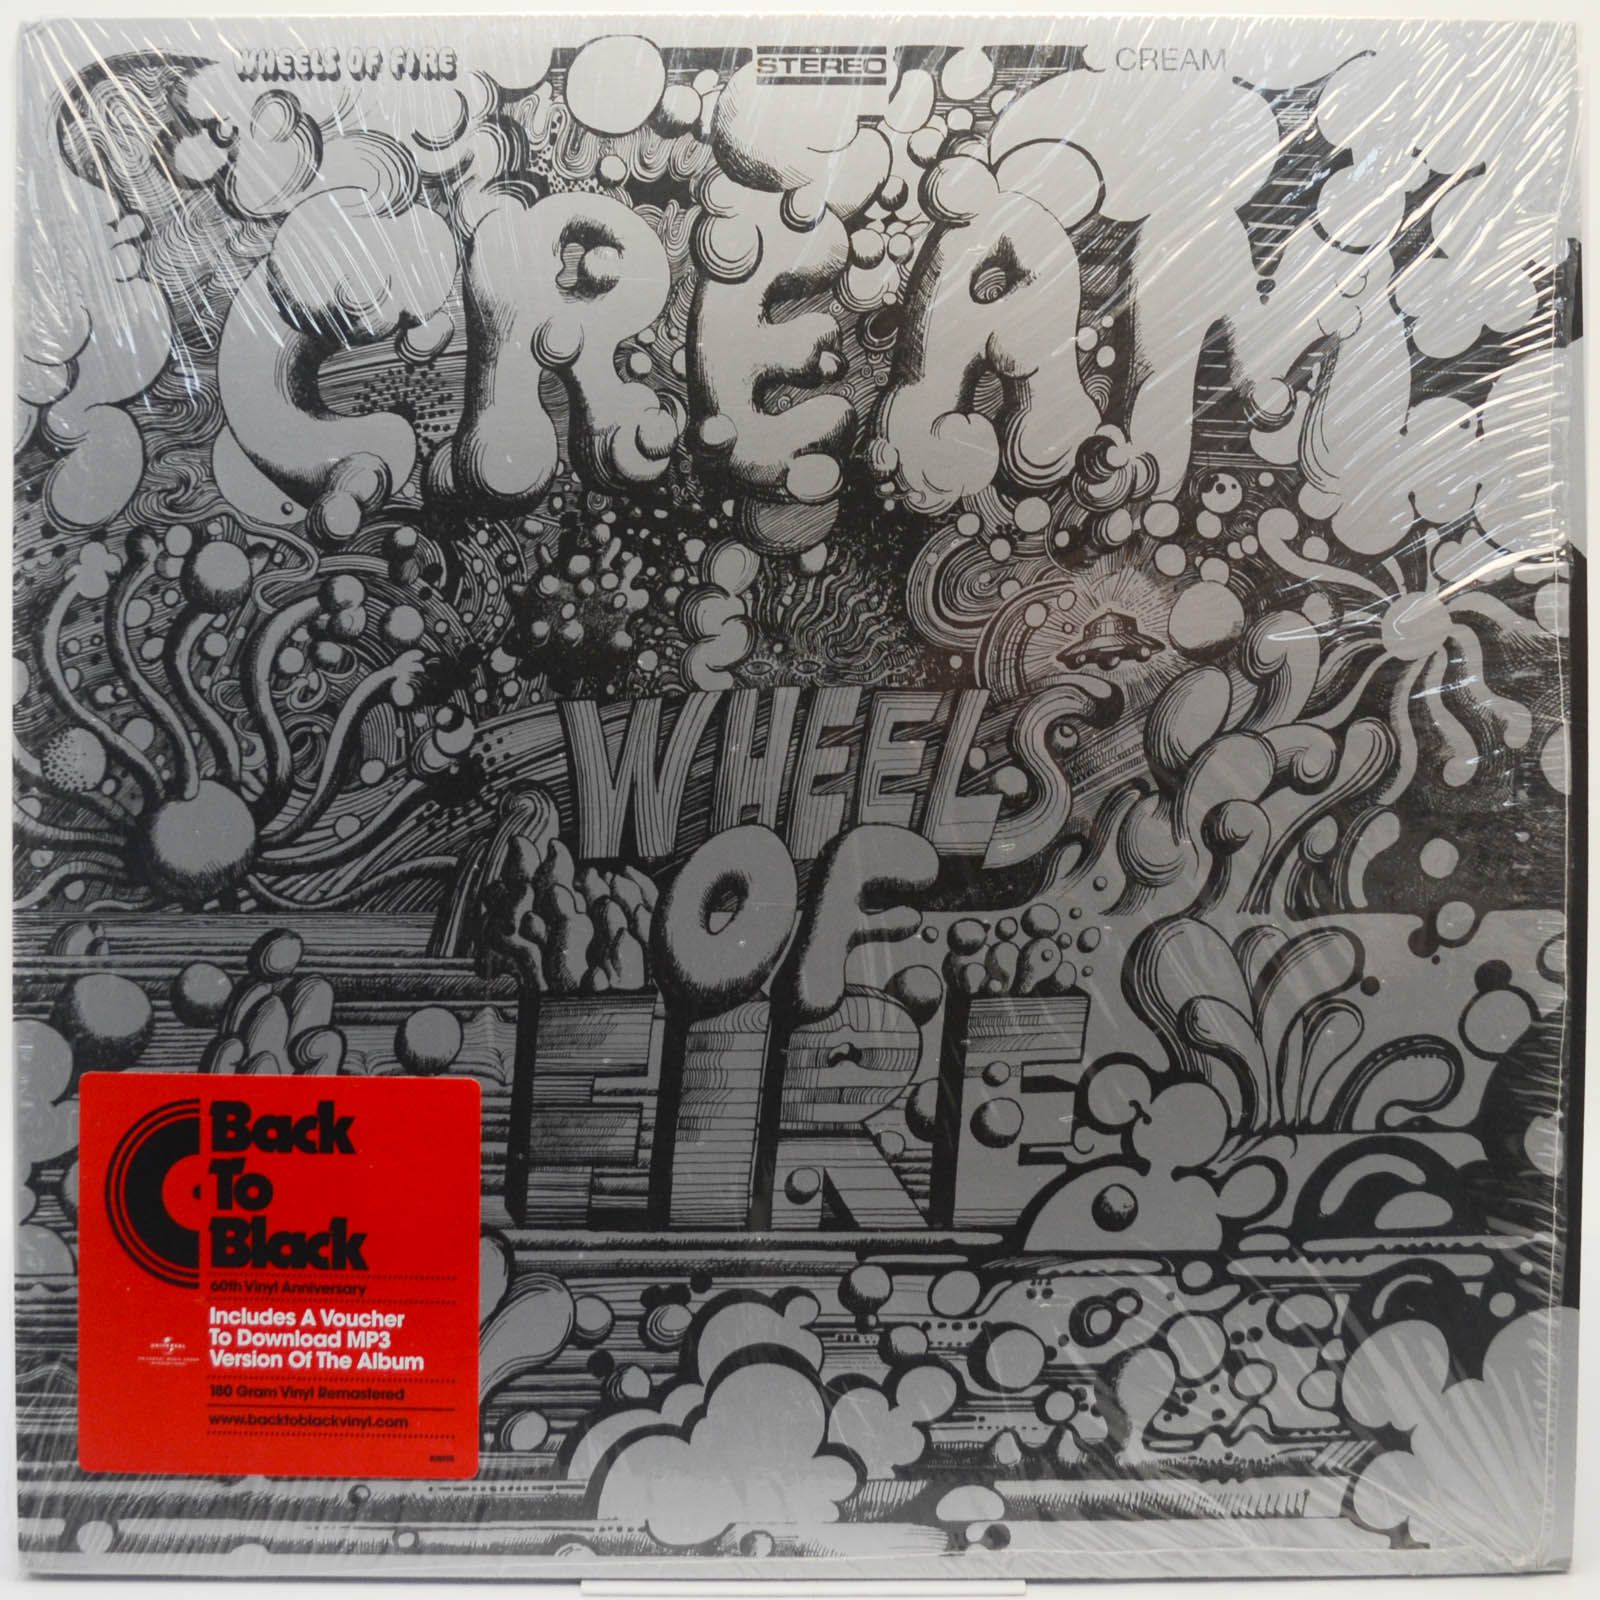 Cream — Wheels Of Fire (2LP), 1968